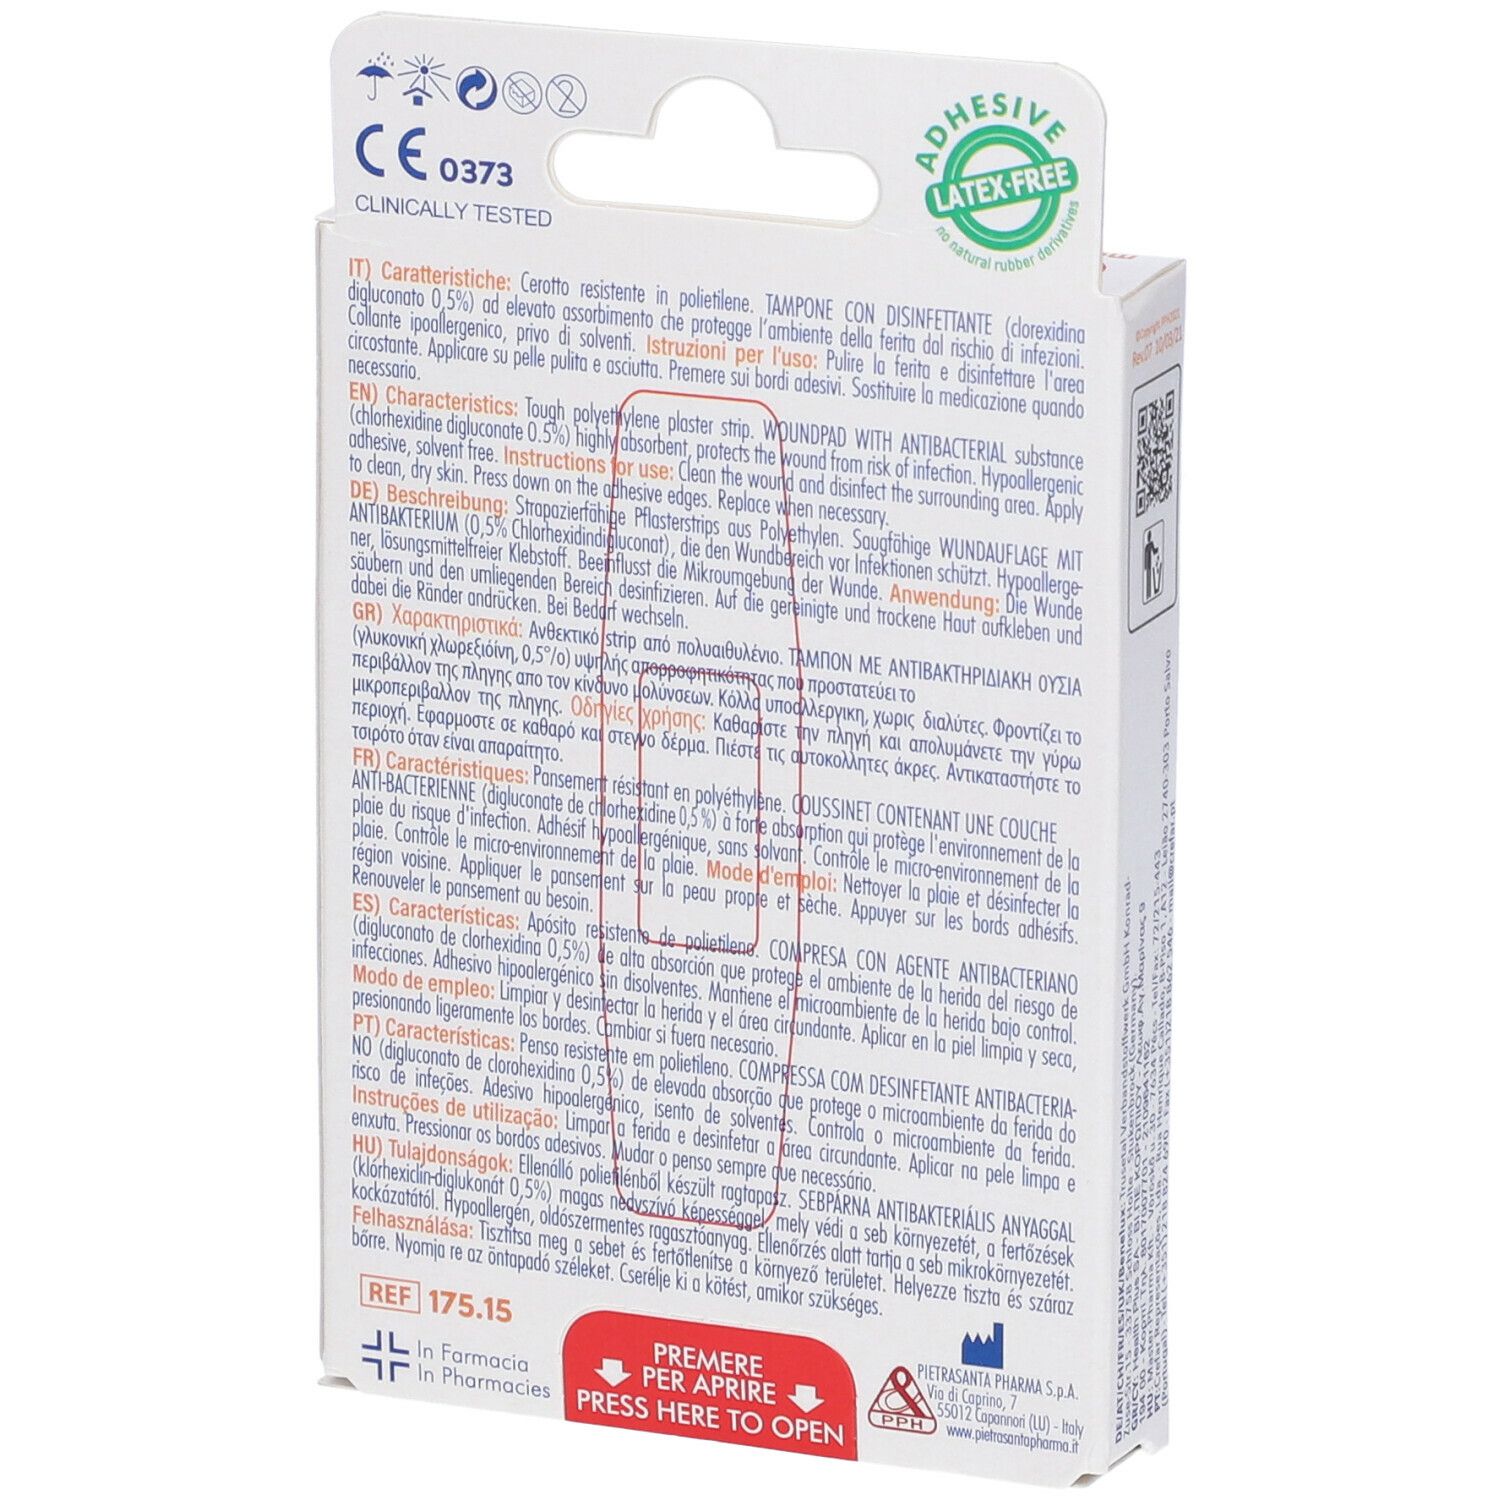 Master-Aid® Forte Med® 78 x 20 mm Medio Tampone con disinfettante